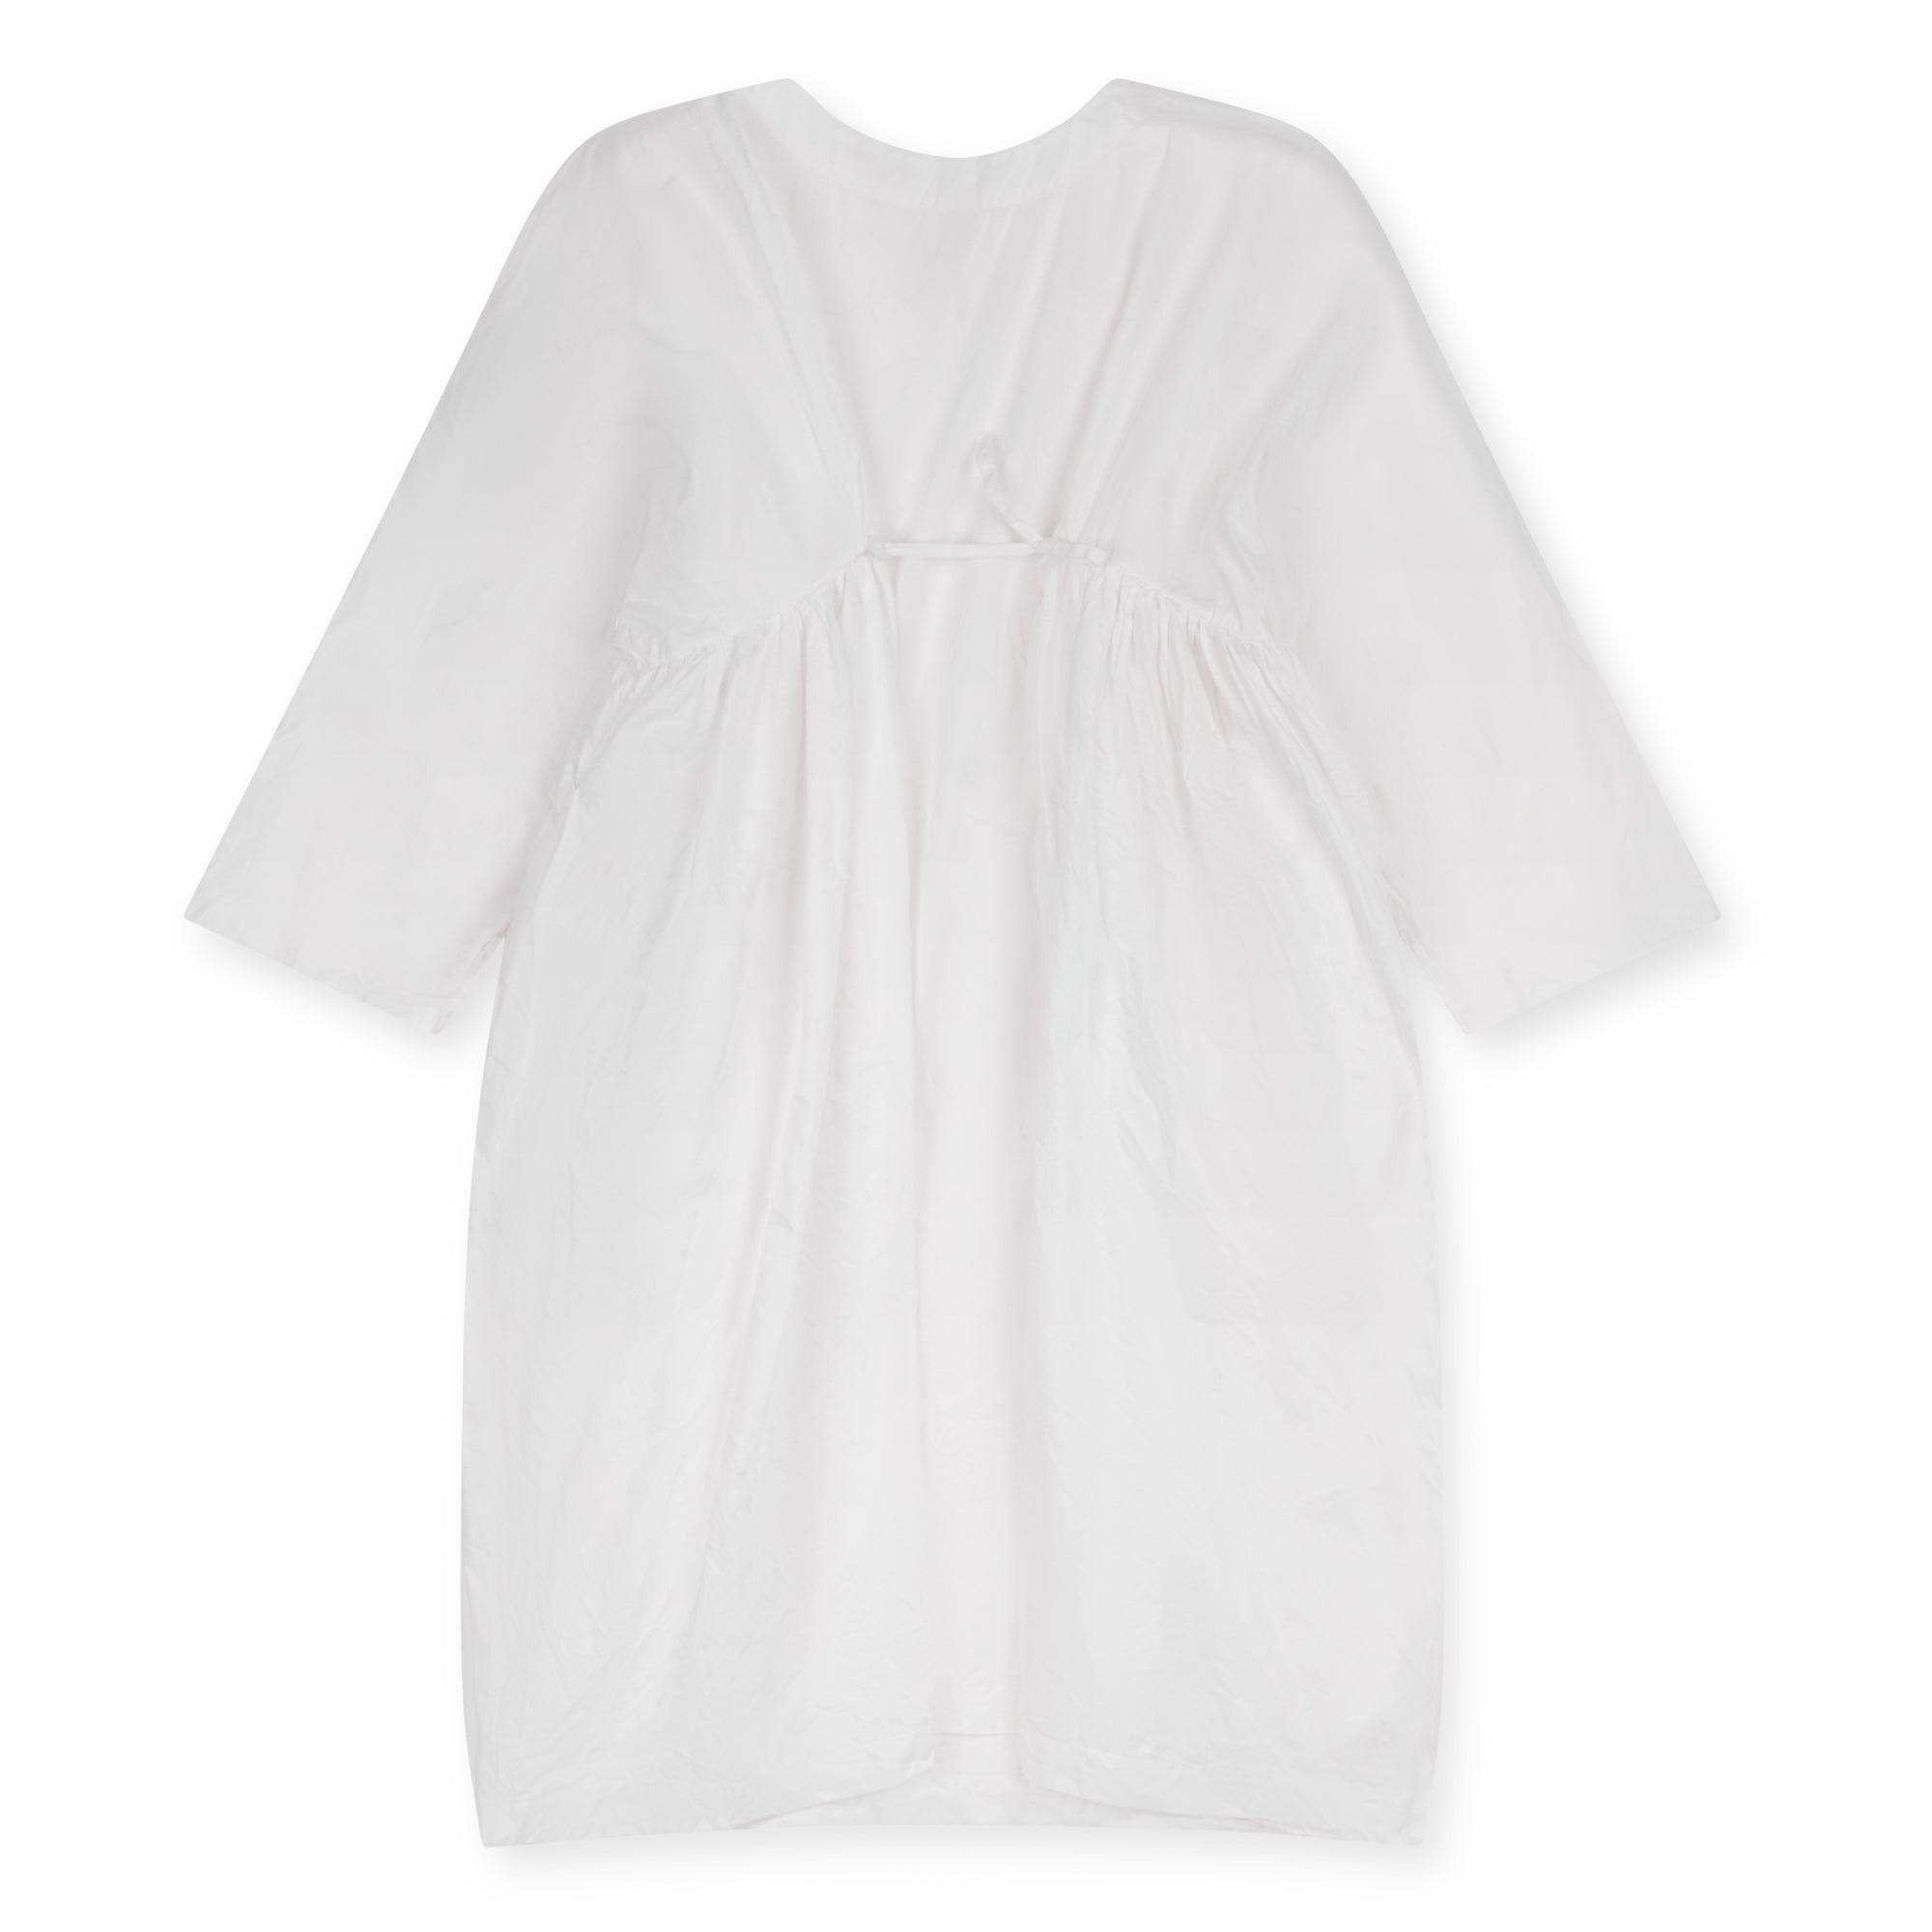 Daniela Gregis Women's Medium Newpride Jeroni Dress (White) by DANIELA GREGIS